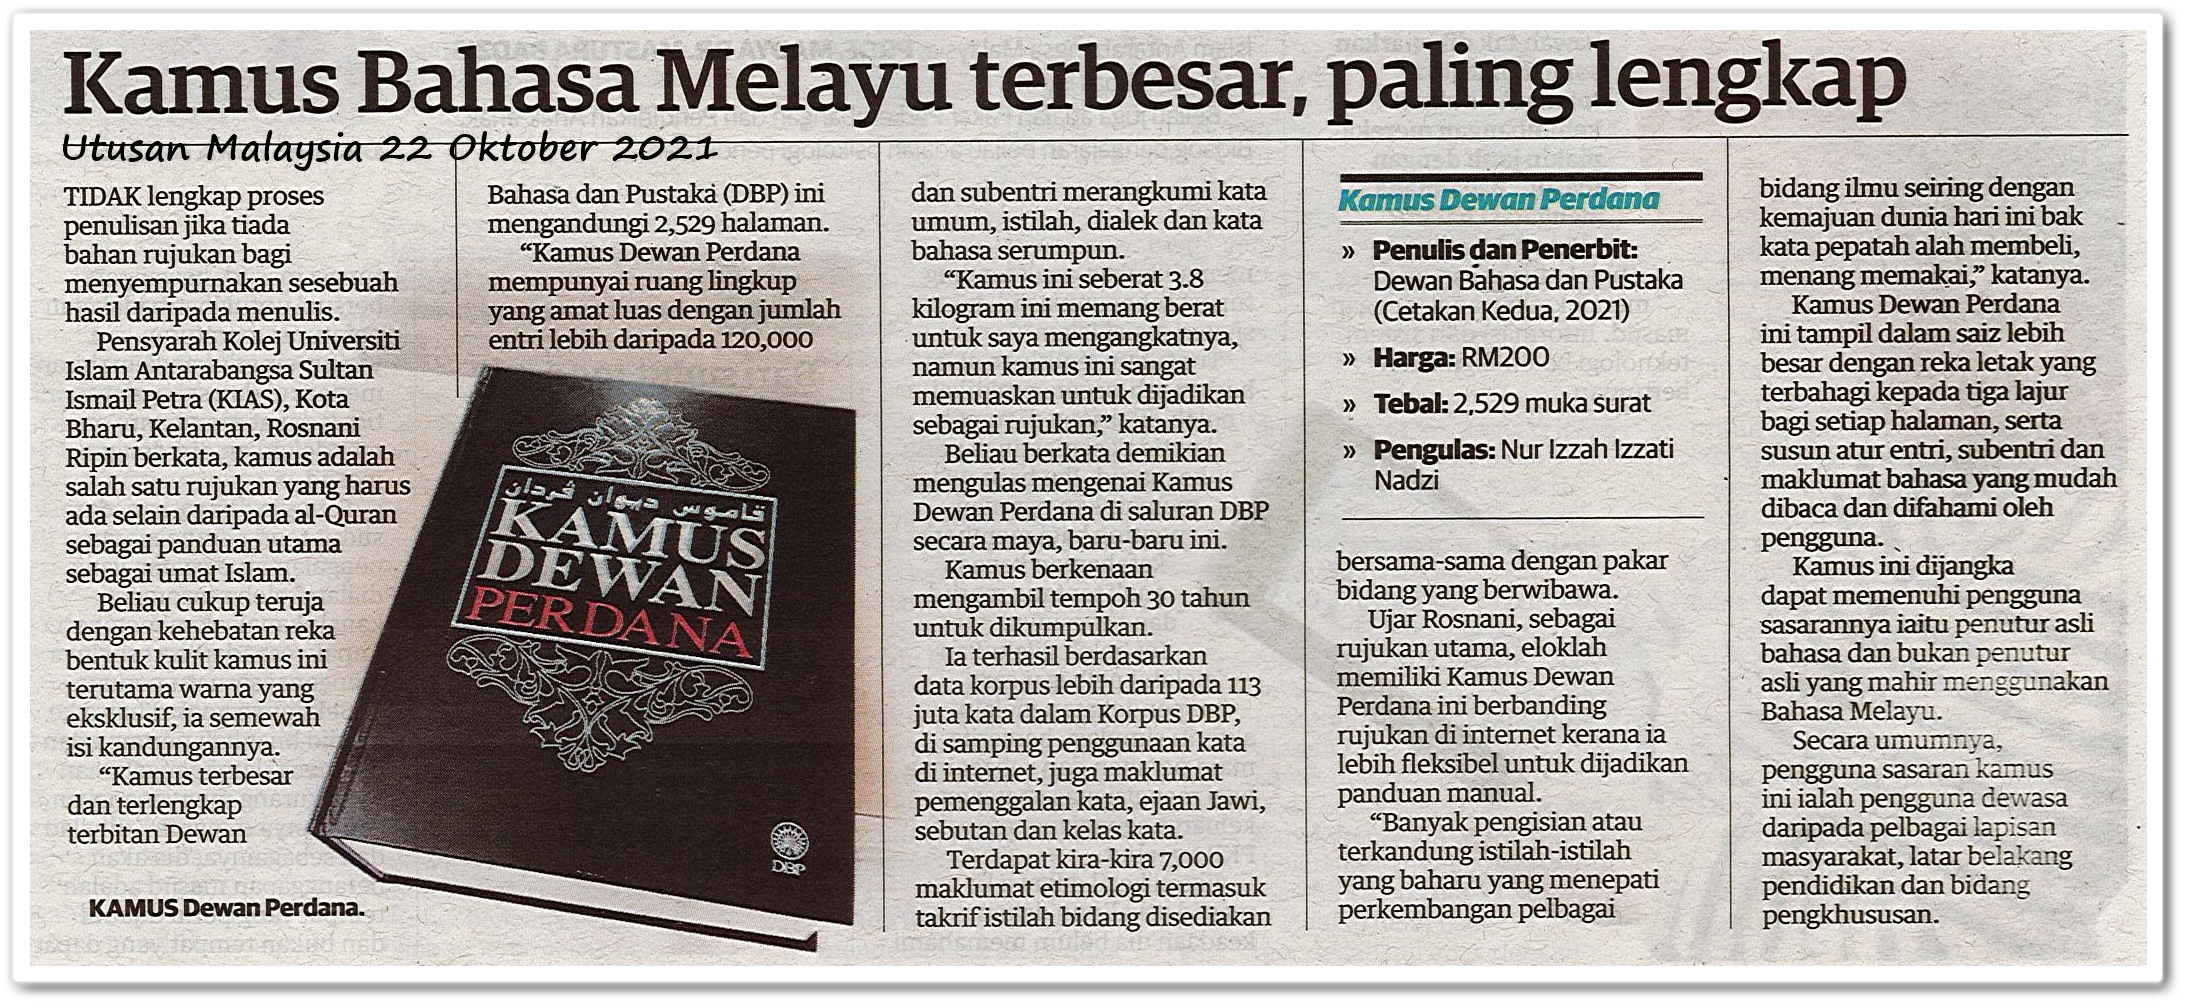 Kamus Bahasa Melayu terbesar, paling lengkap